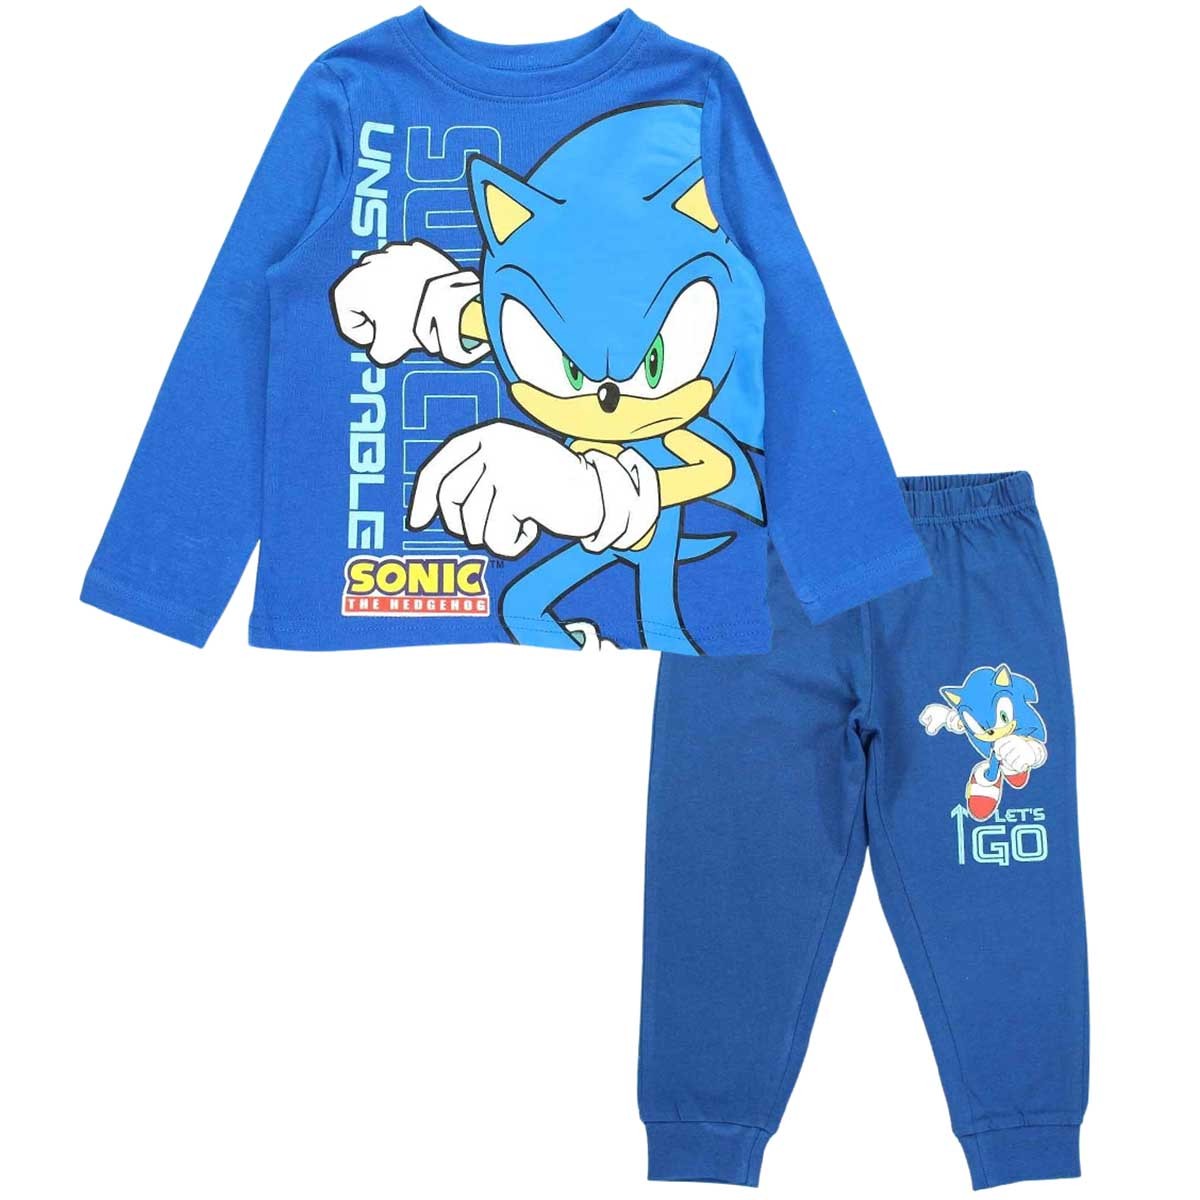 Sonic the Hedgehog pyjama